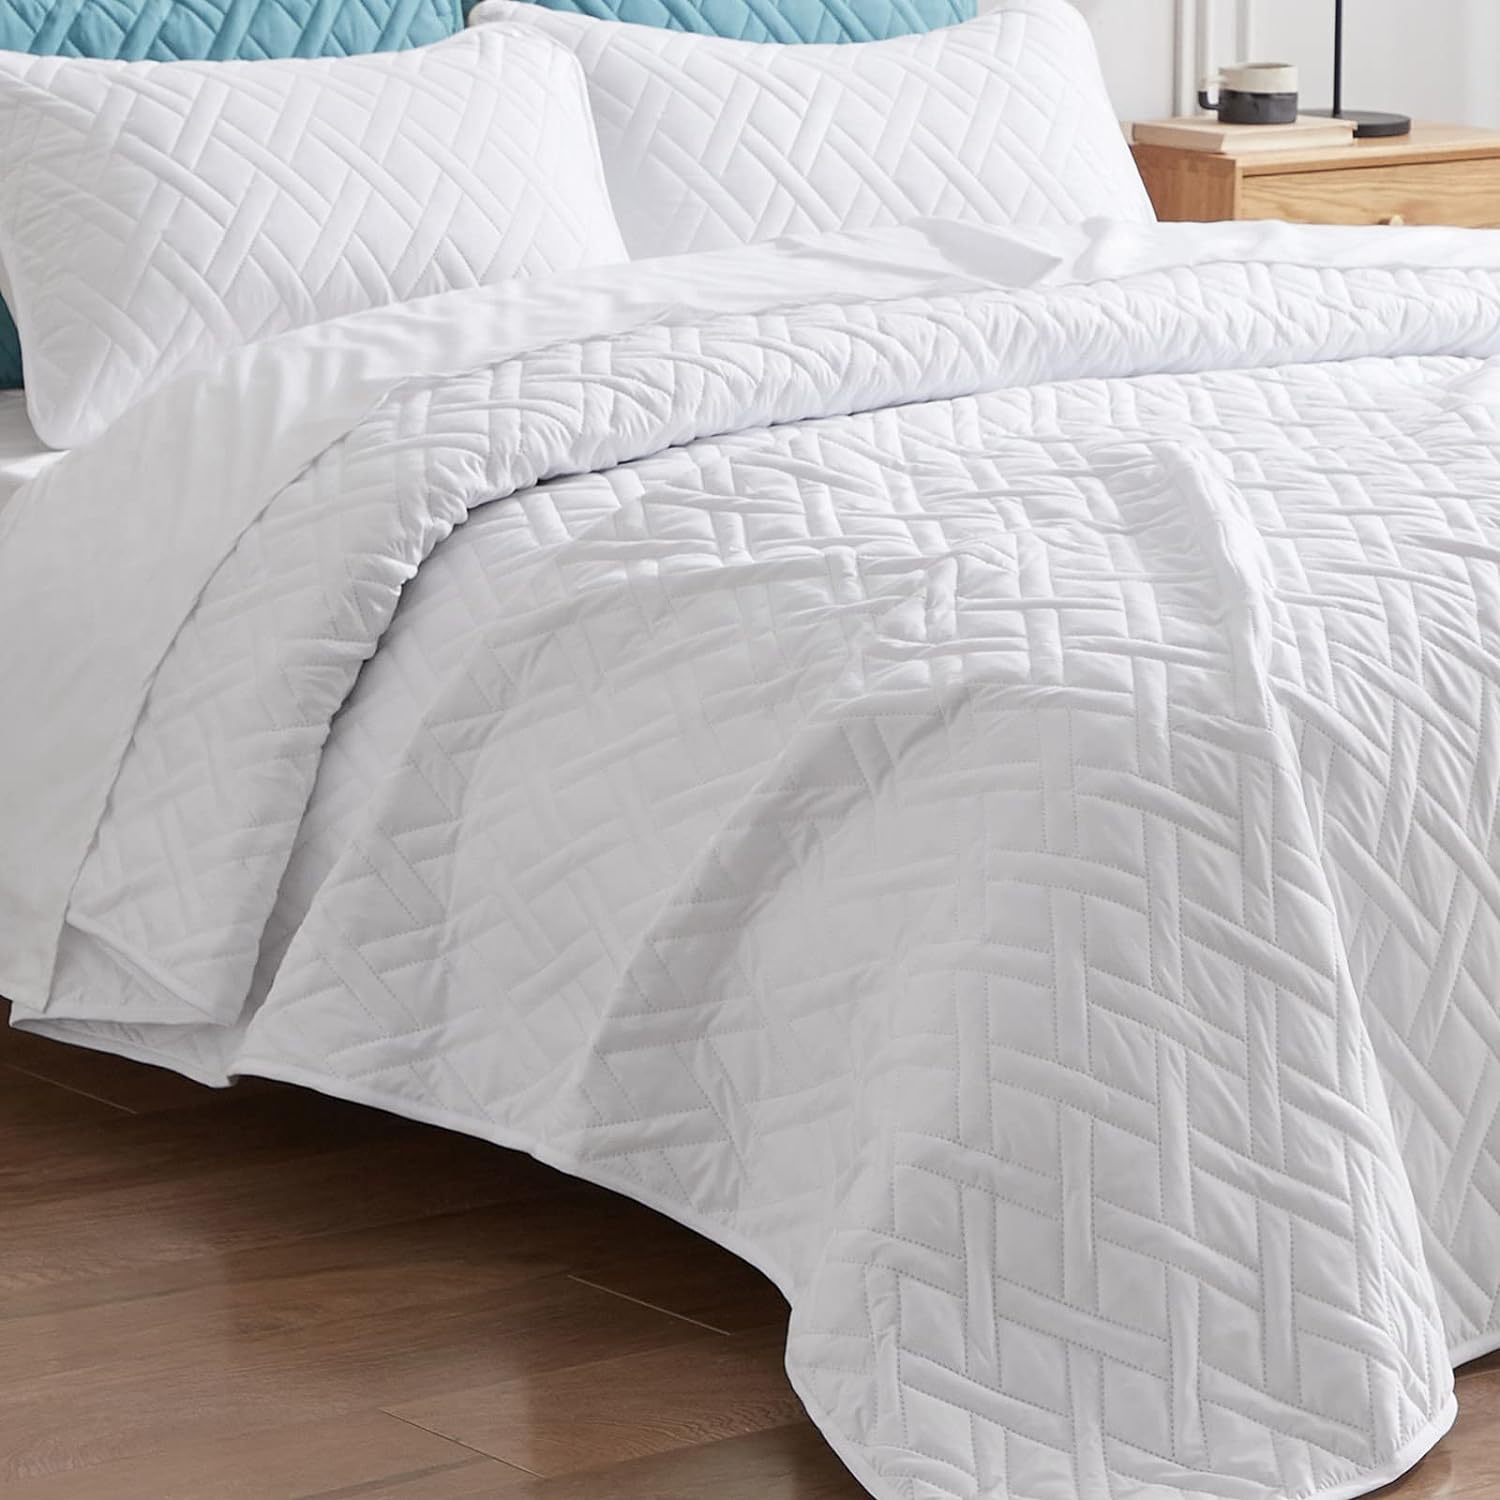 Black Full/Queen Soft Microfiber Lightweight Comforter Quilt Set for All Season VEEYOO Bedspread Coverlet Set 3 Pieces